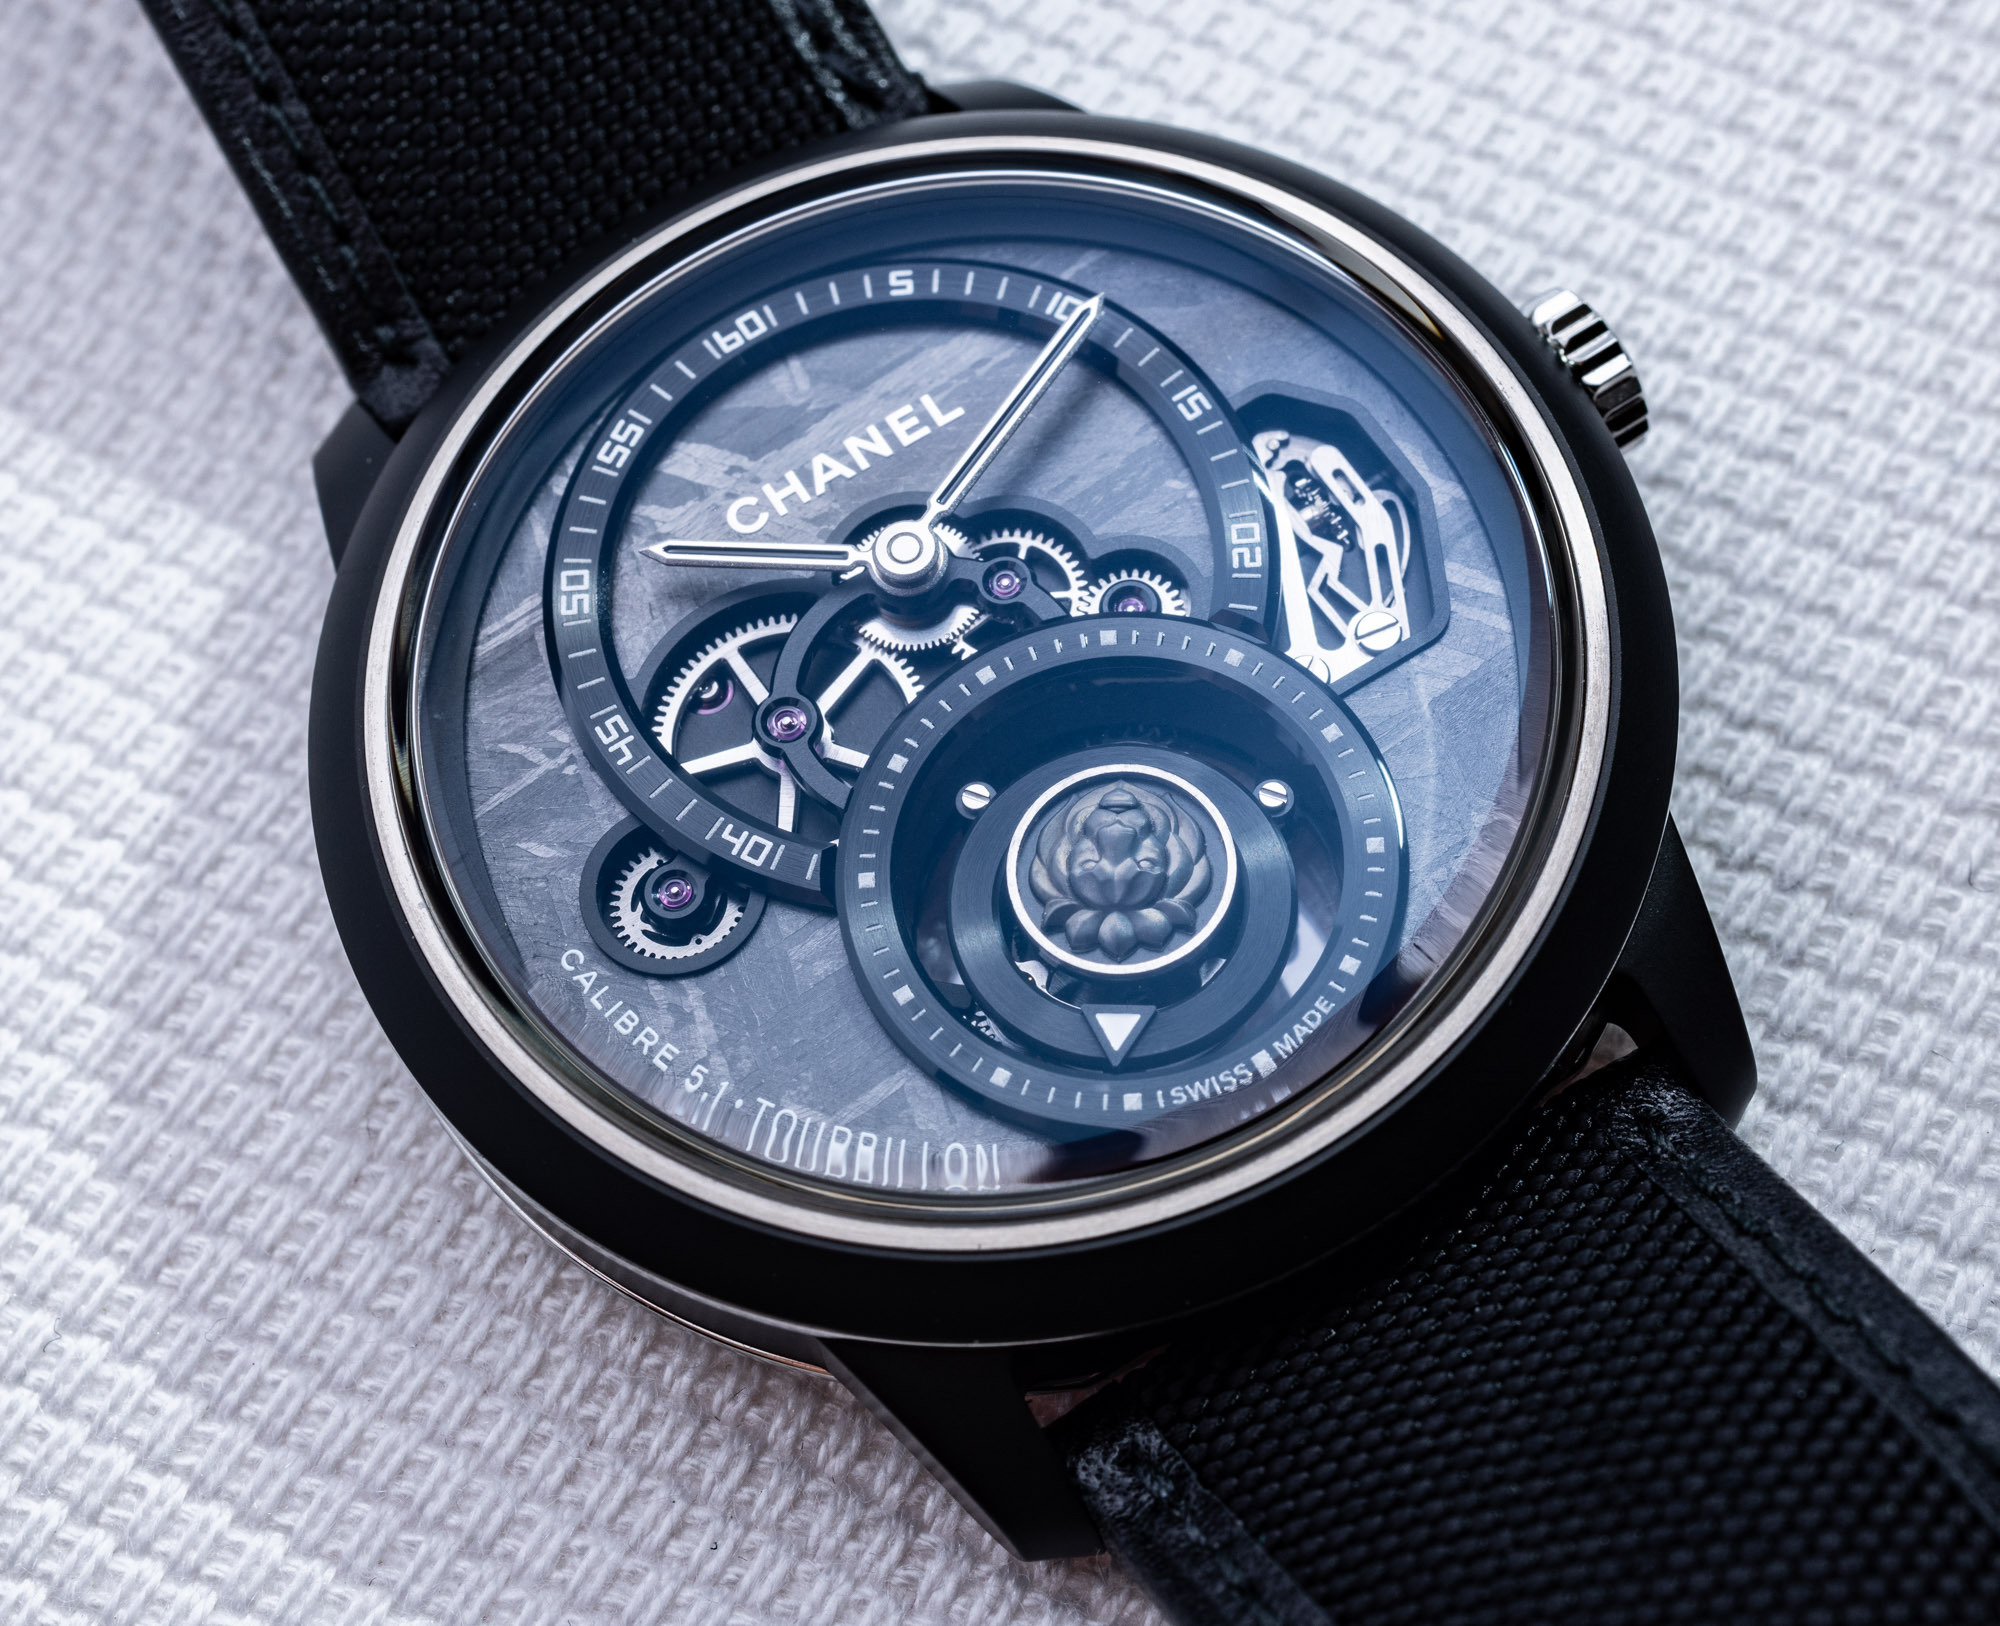 Собственноручно: часы Chanel Monsieur Tourbillon Meteorite